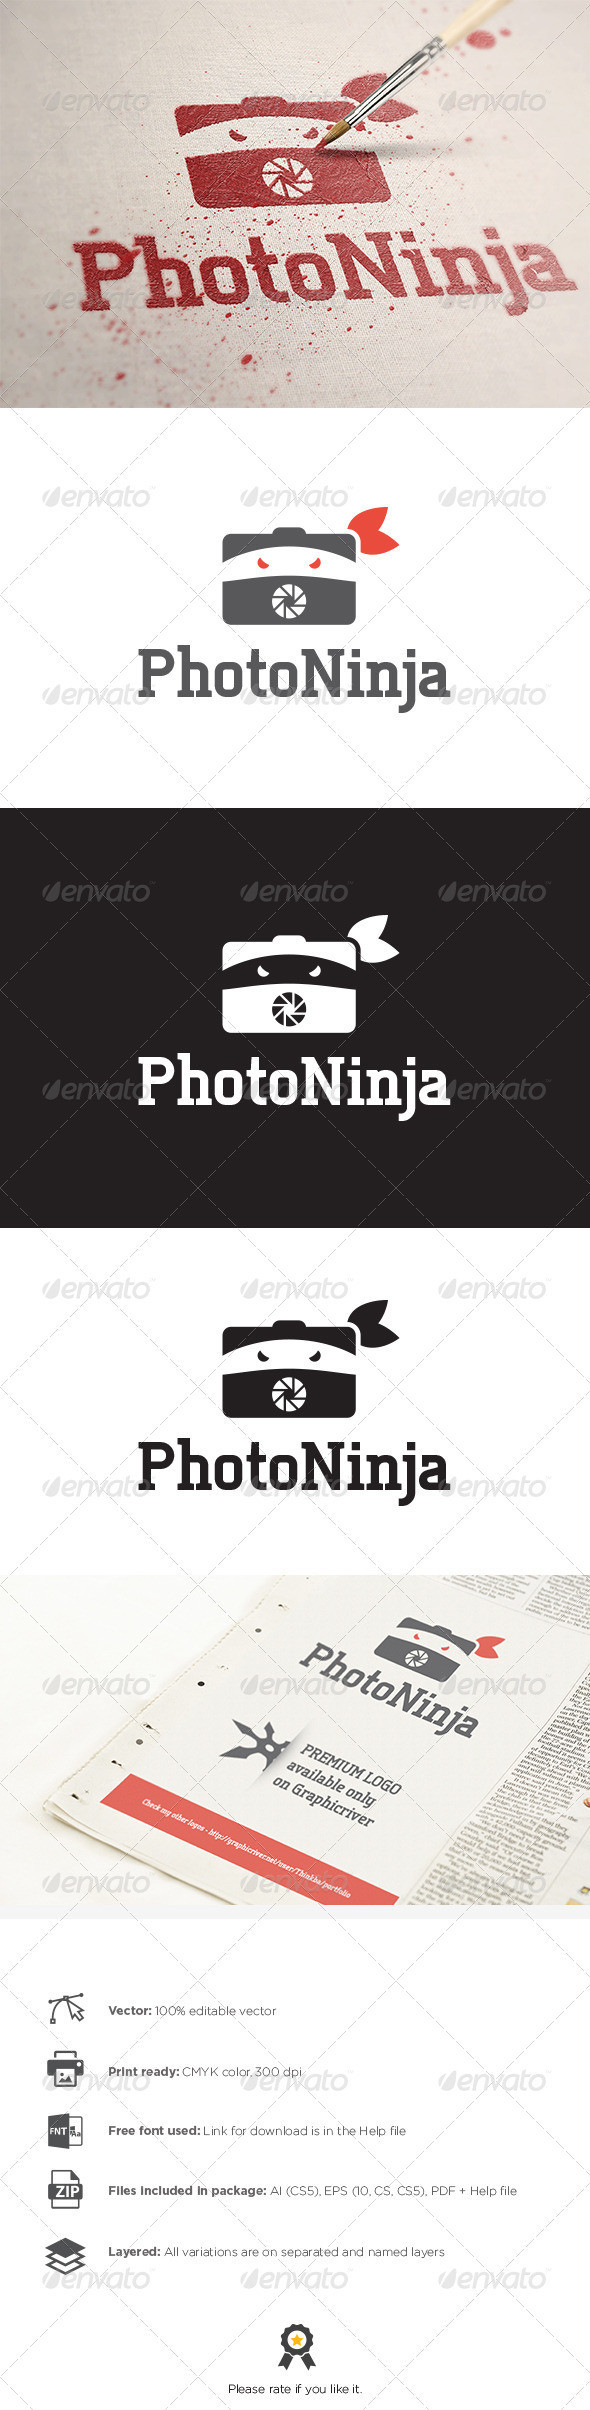 Photo ninja logo template preview